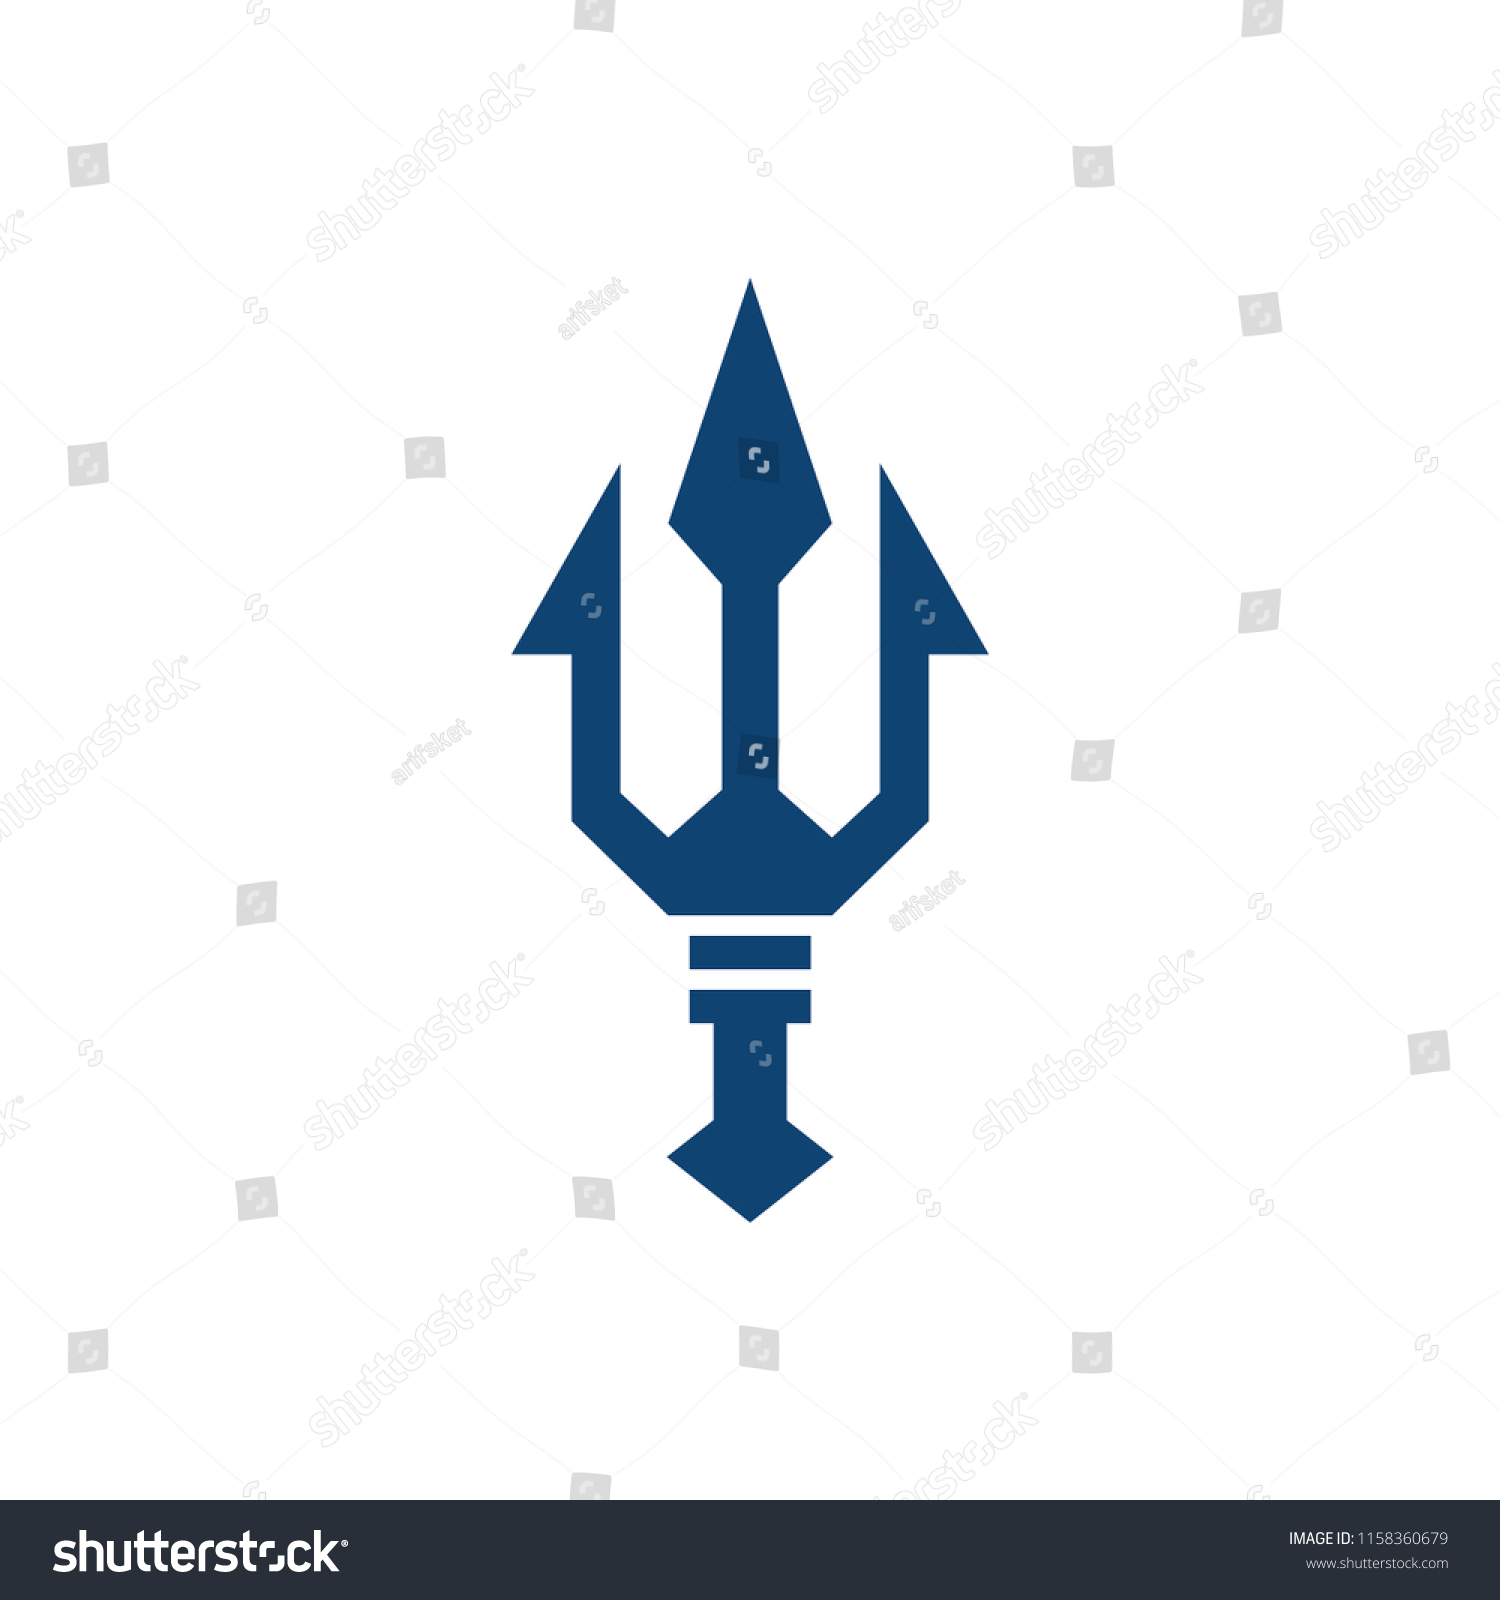 Trident Logo Design Stock Vector (Royalty Free) 1158360679